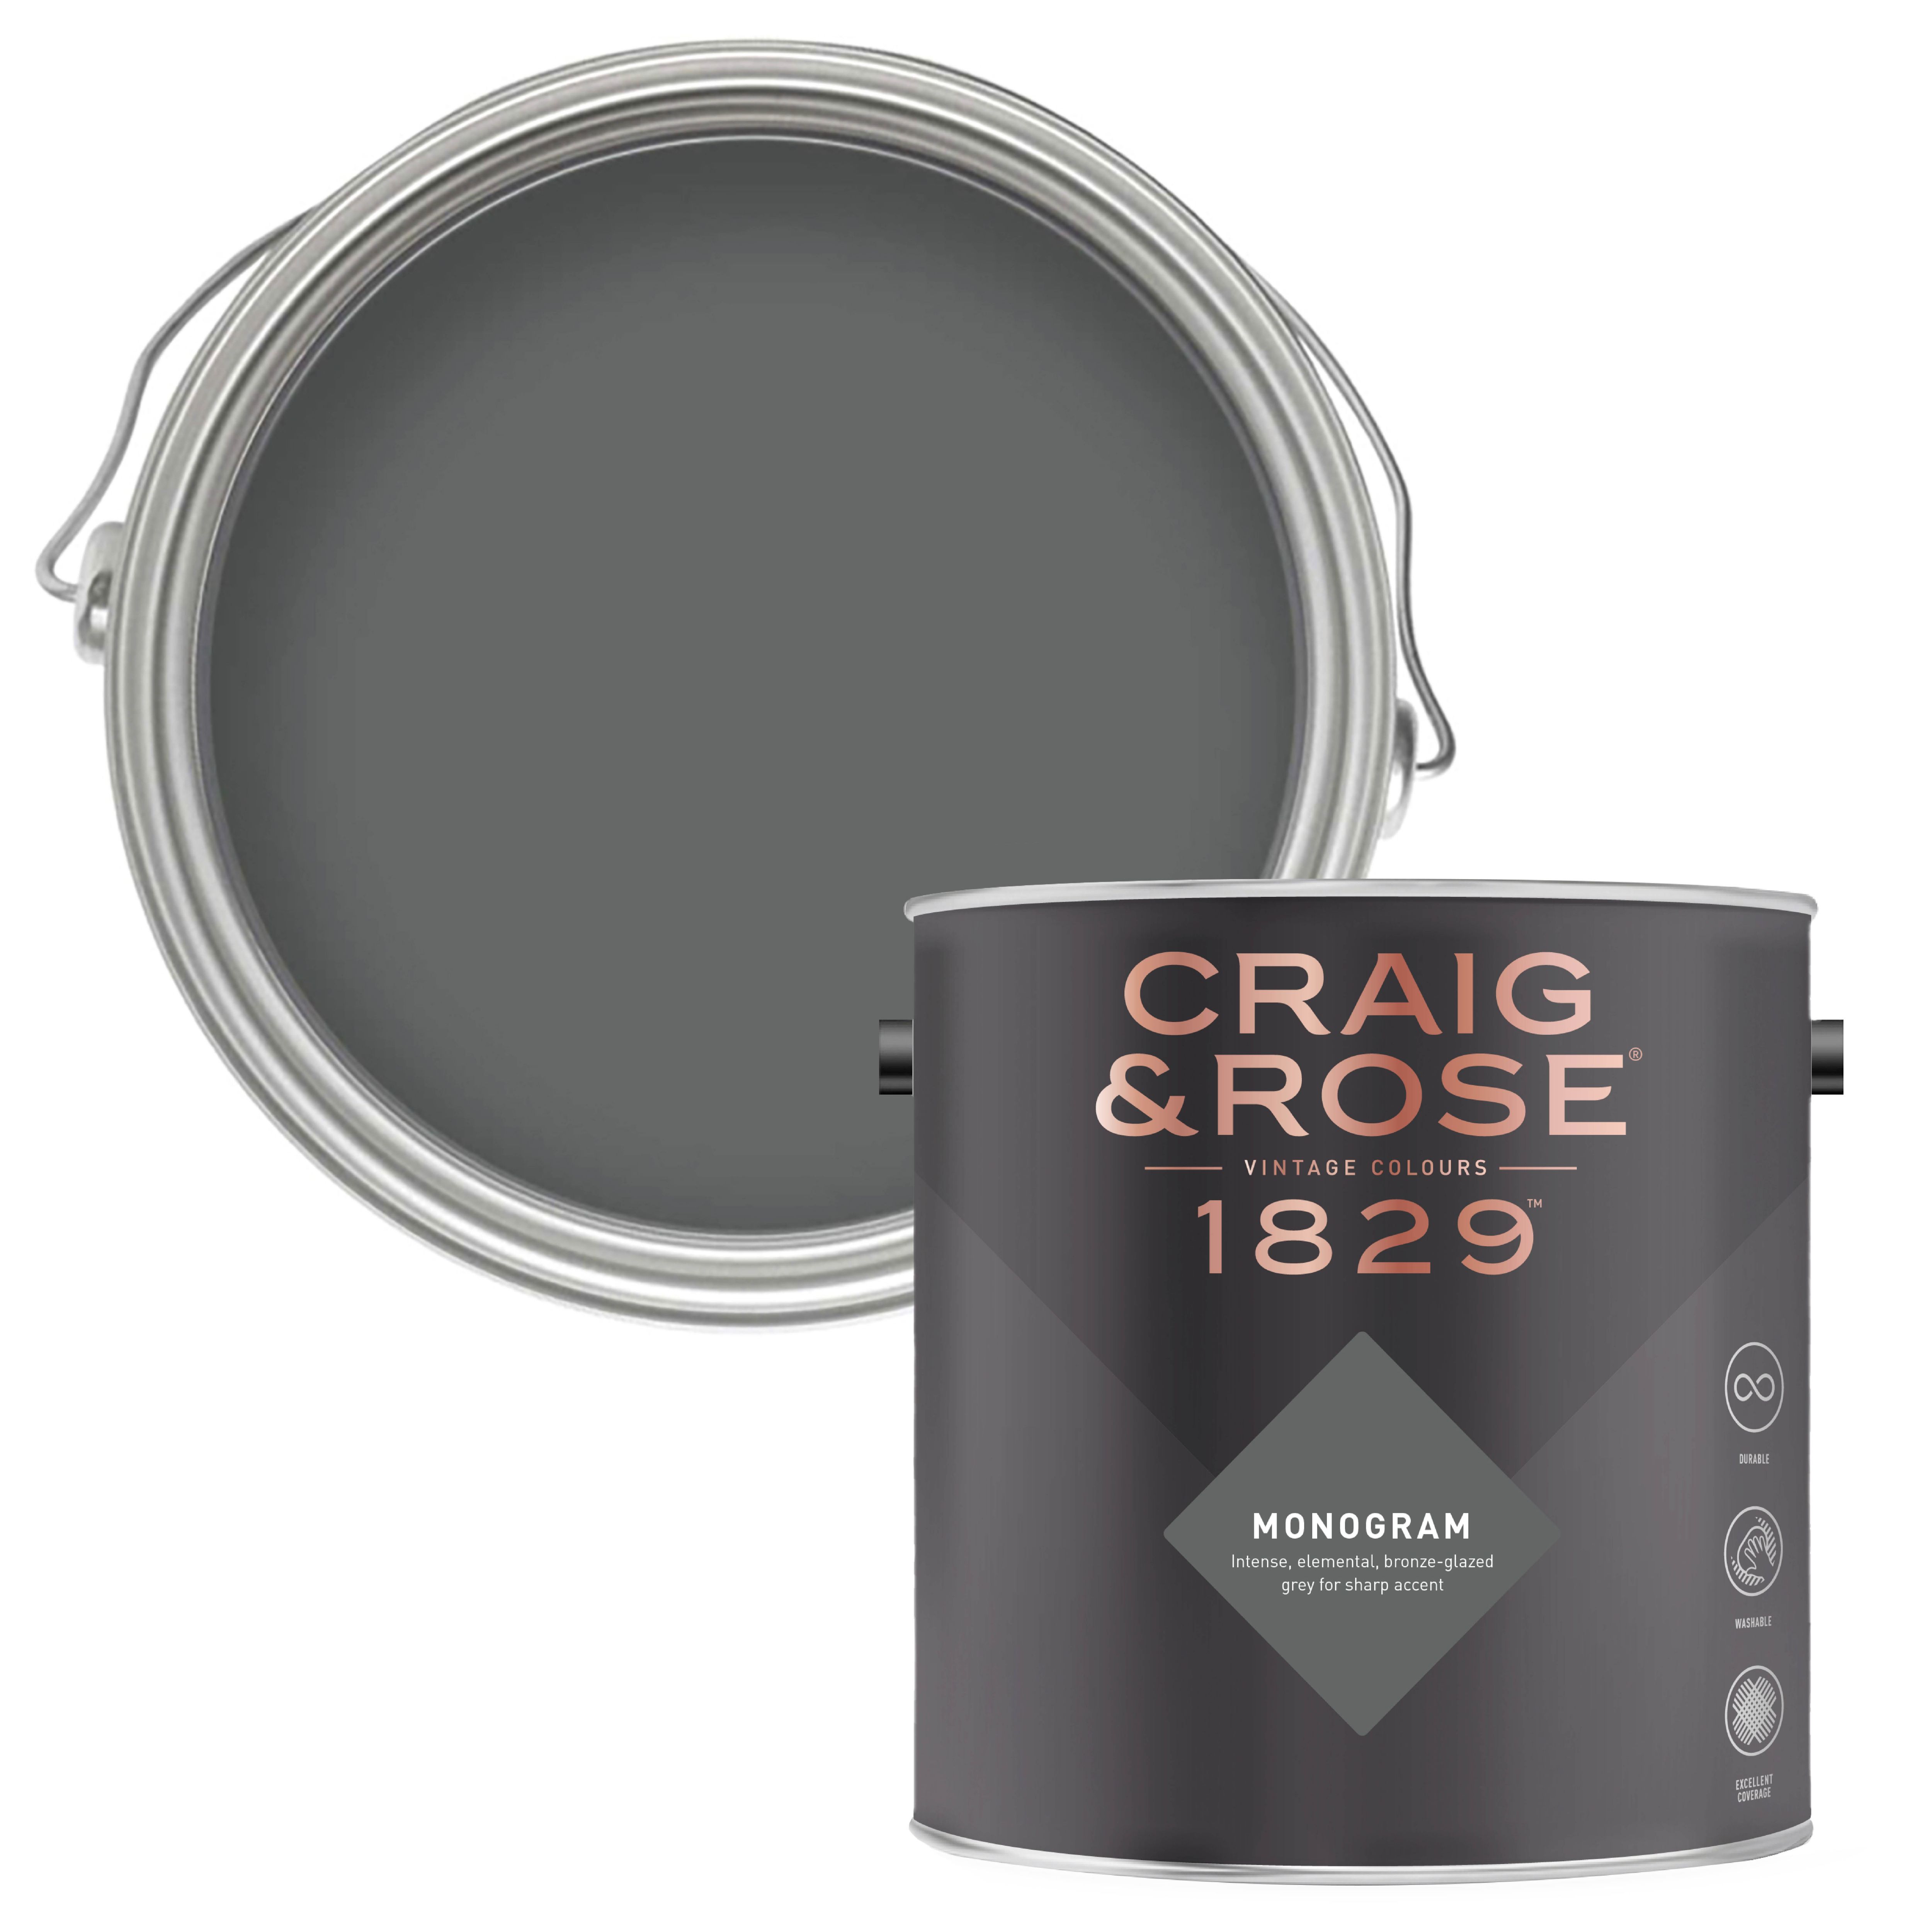 Craig & Rose 1829 Craftsman's White Chalky Emulsion Paint, 2.5L